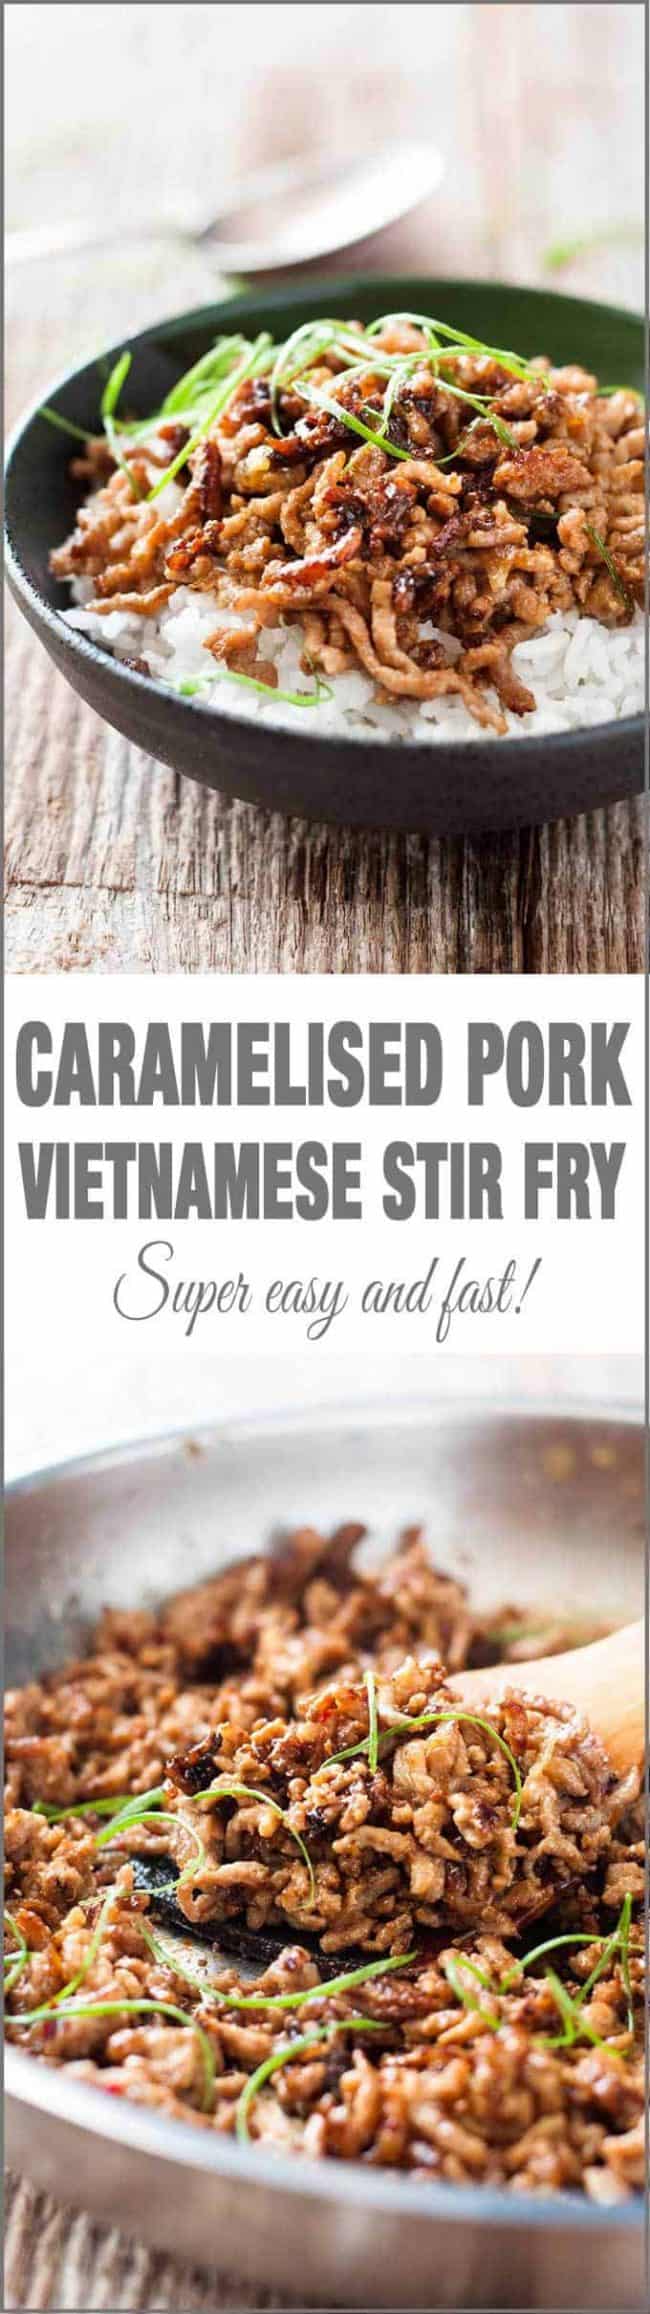 Vietnamese Caramelised Pork Bowls | RecipeTin Eats